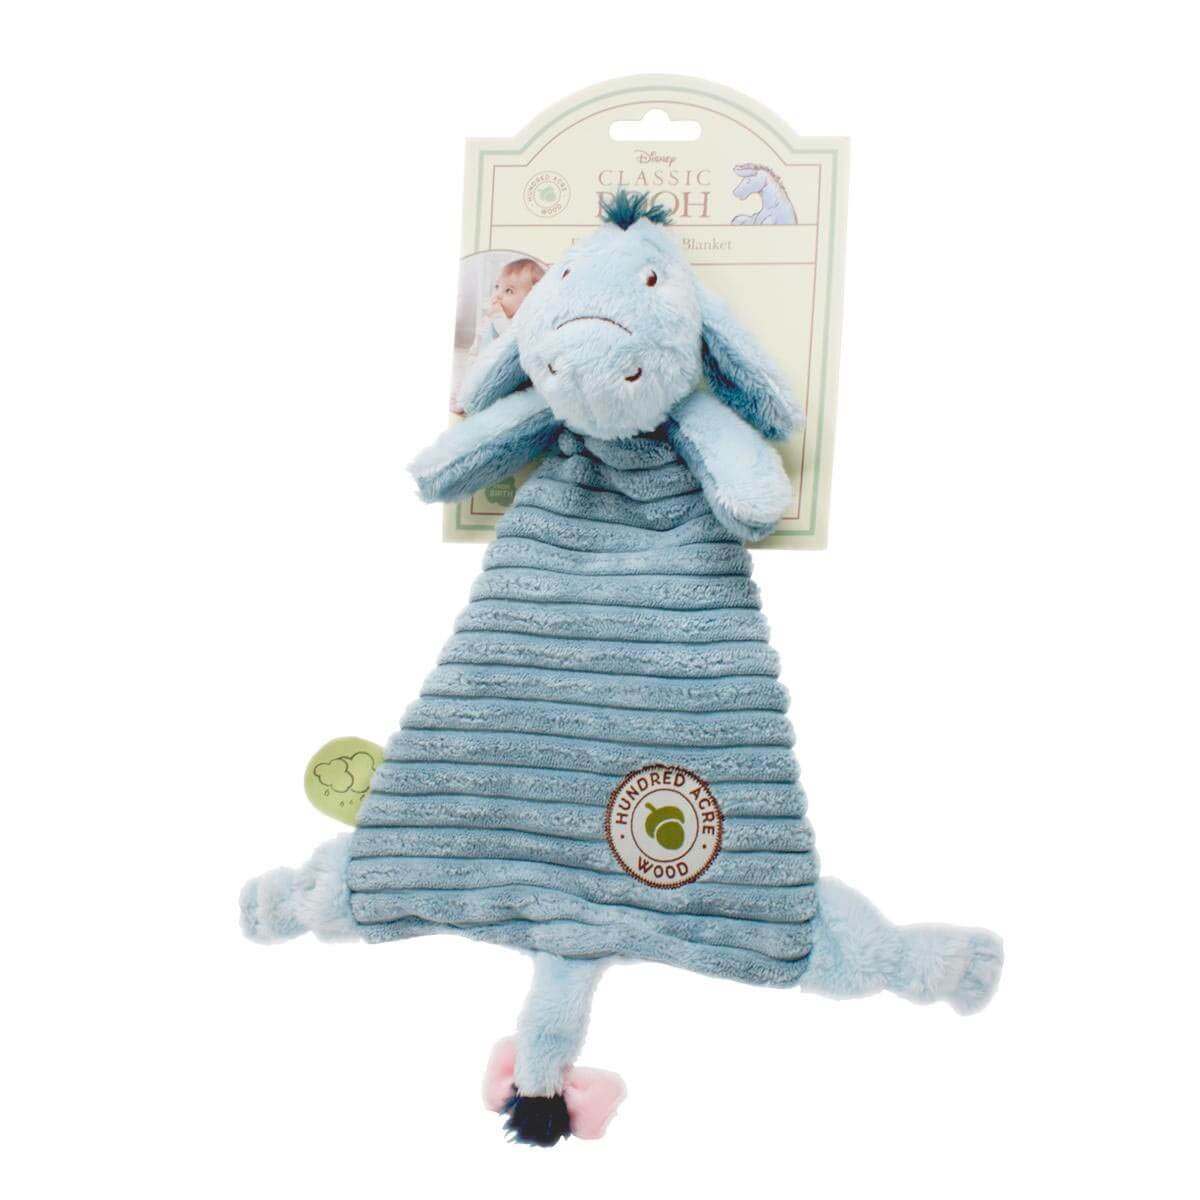 Comfort Baby Blanket - Winnie the Pooh - Eeyore